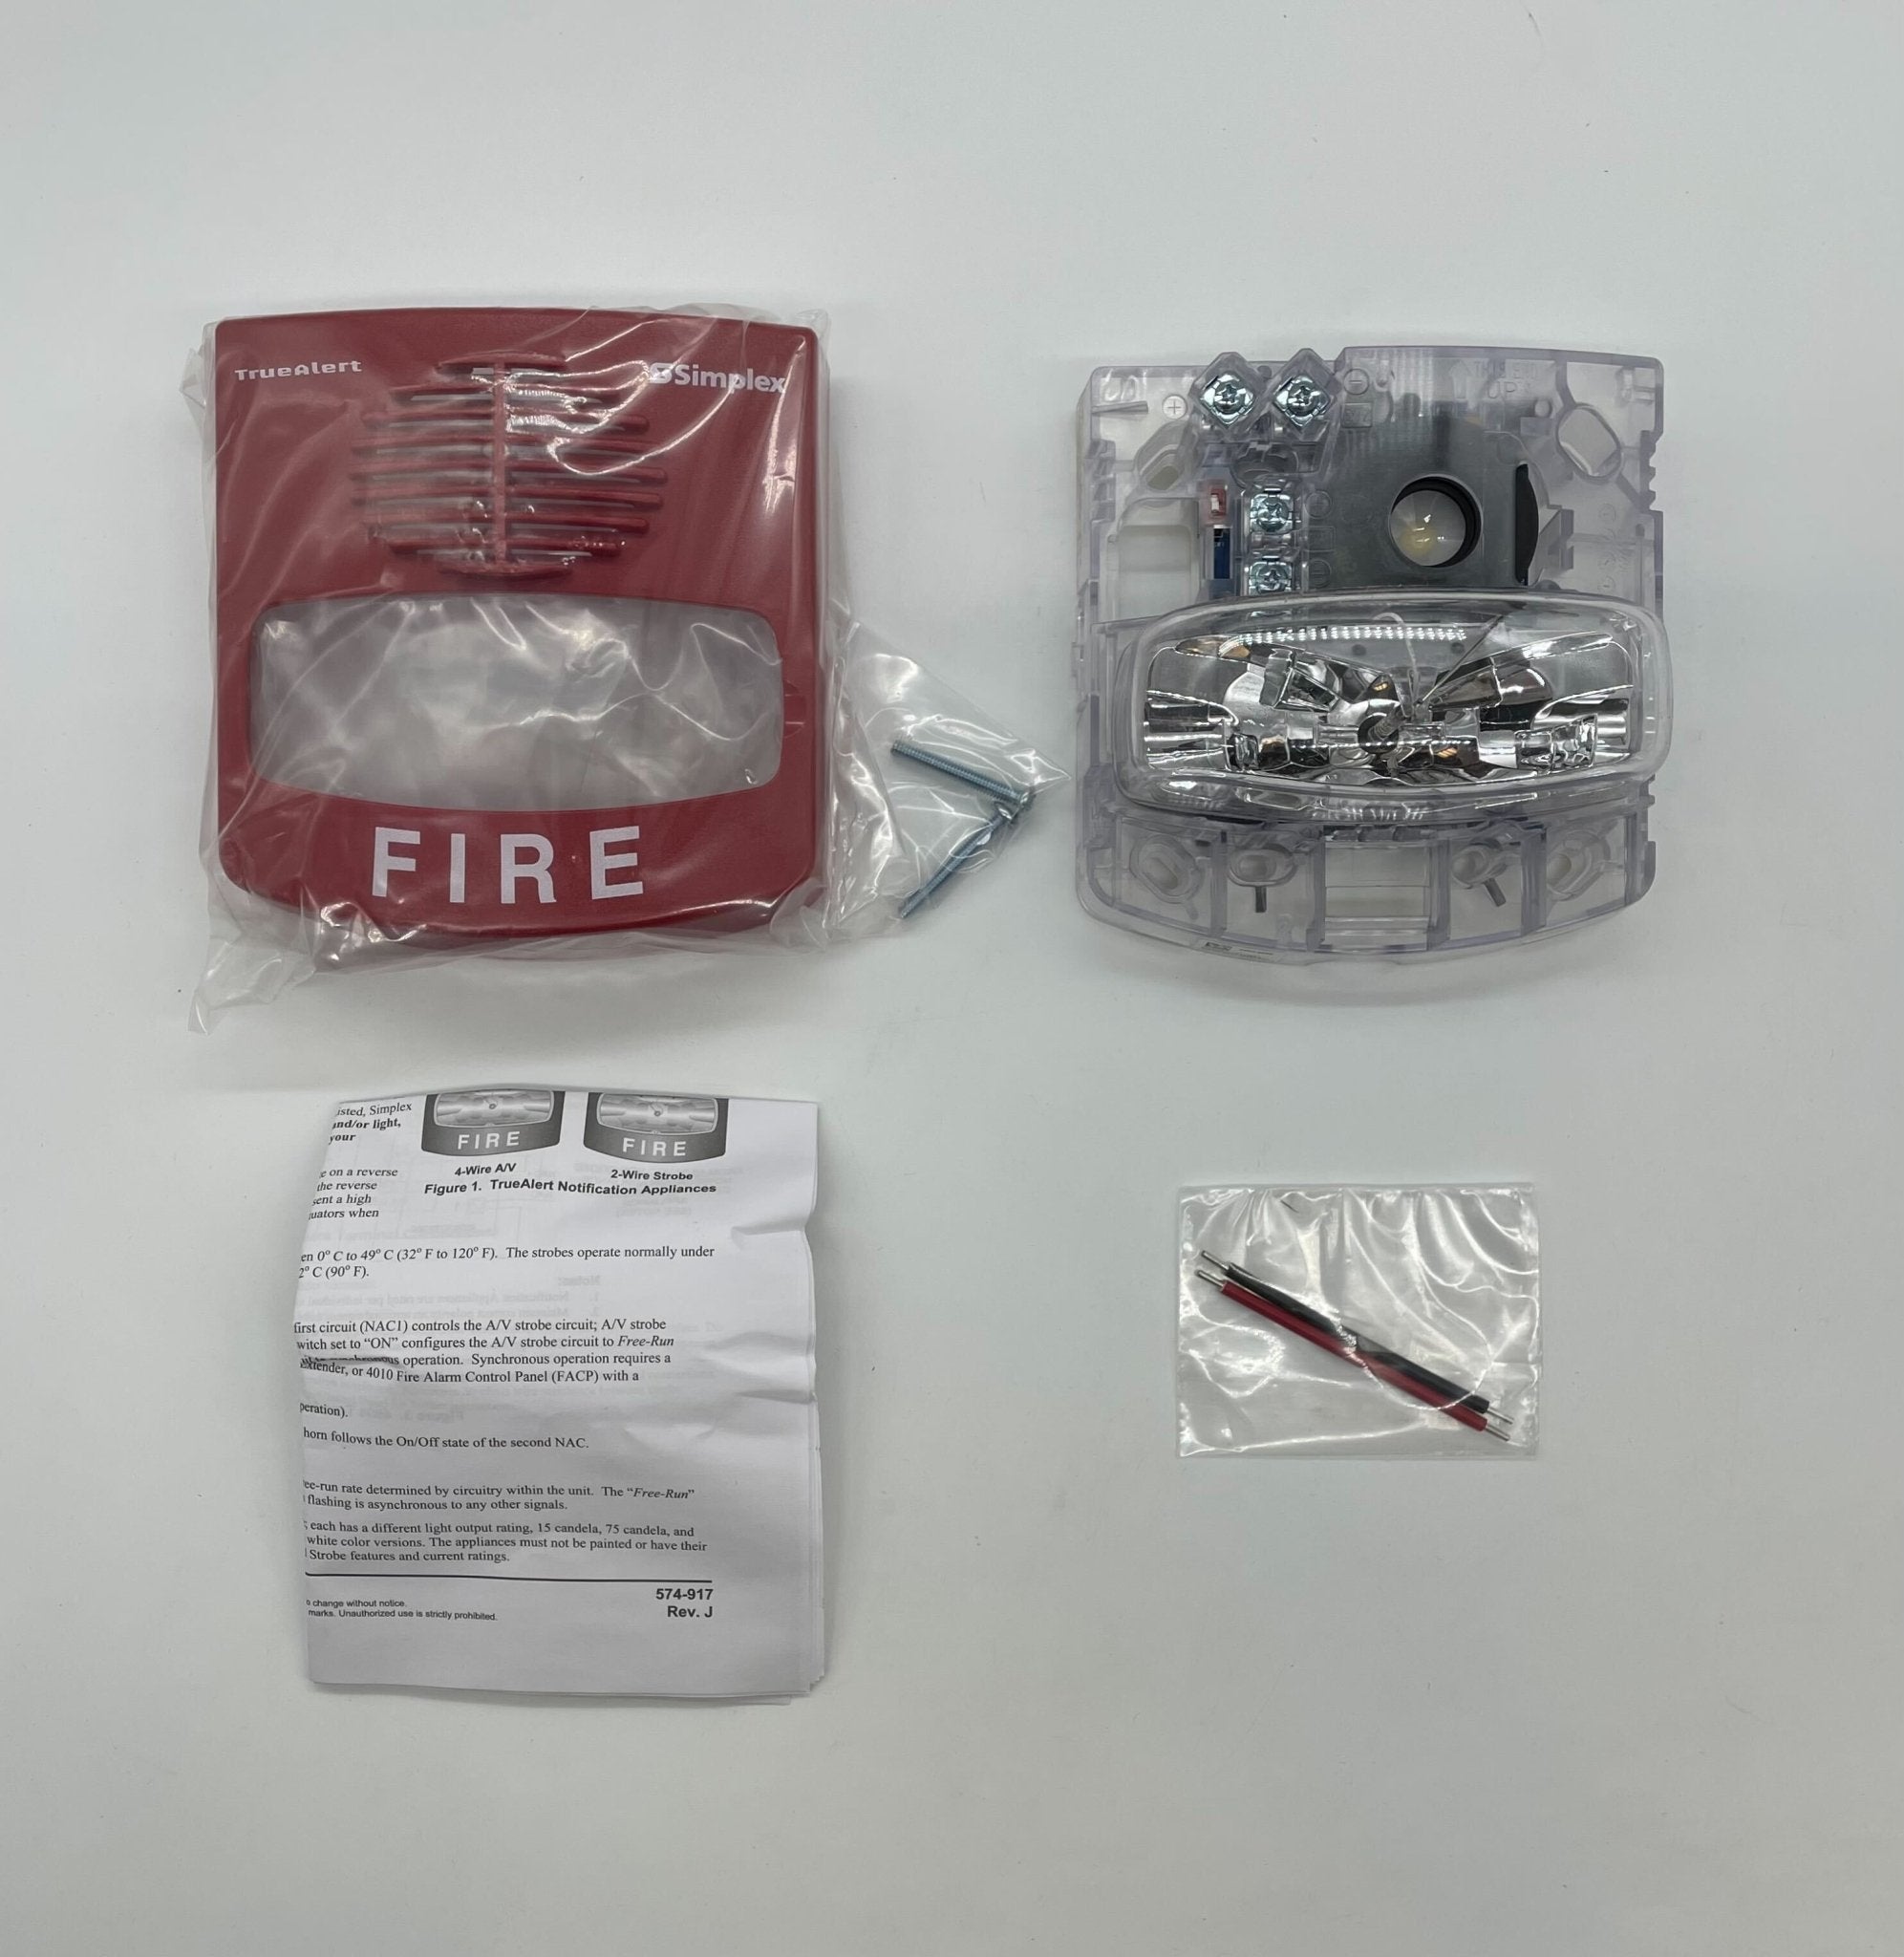 Simplex 4903-9426 - The Fire Alarm Supplier